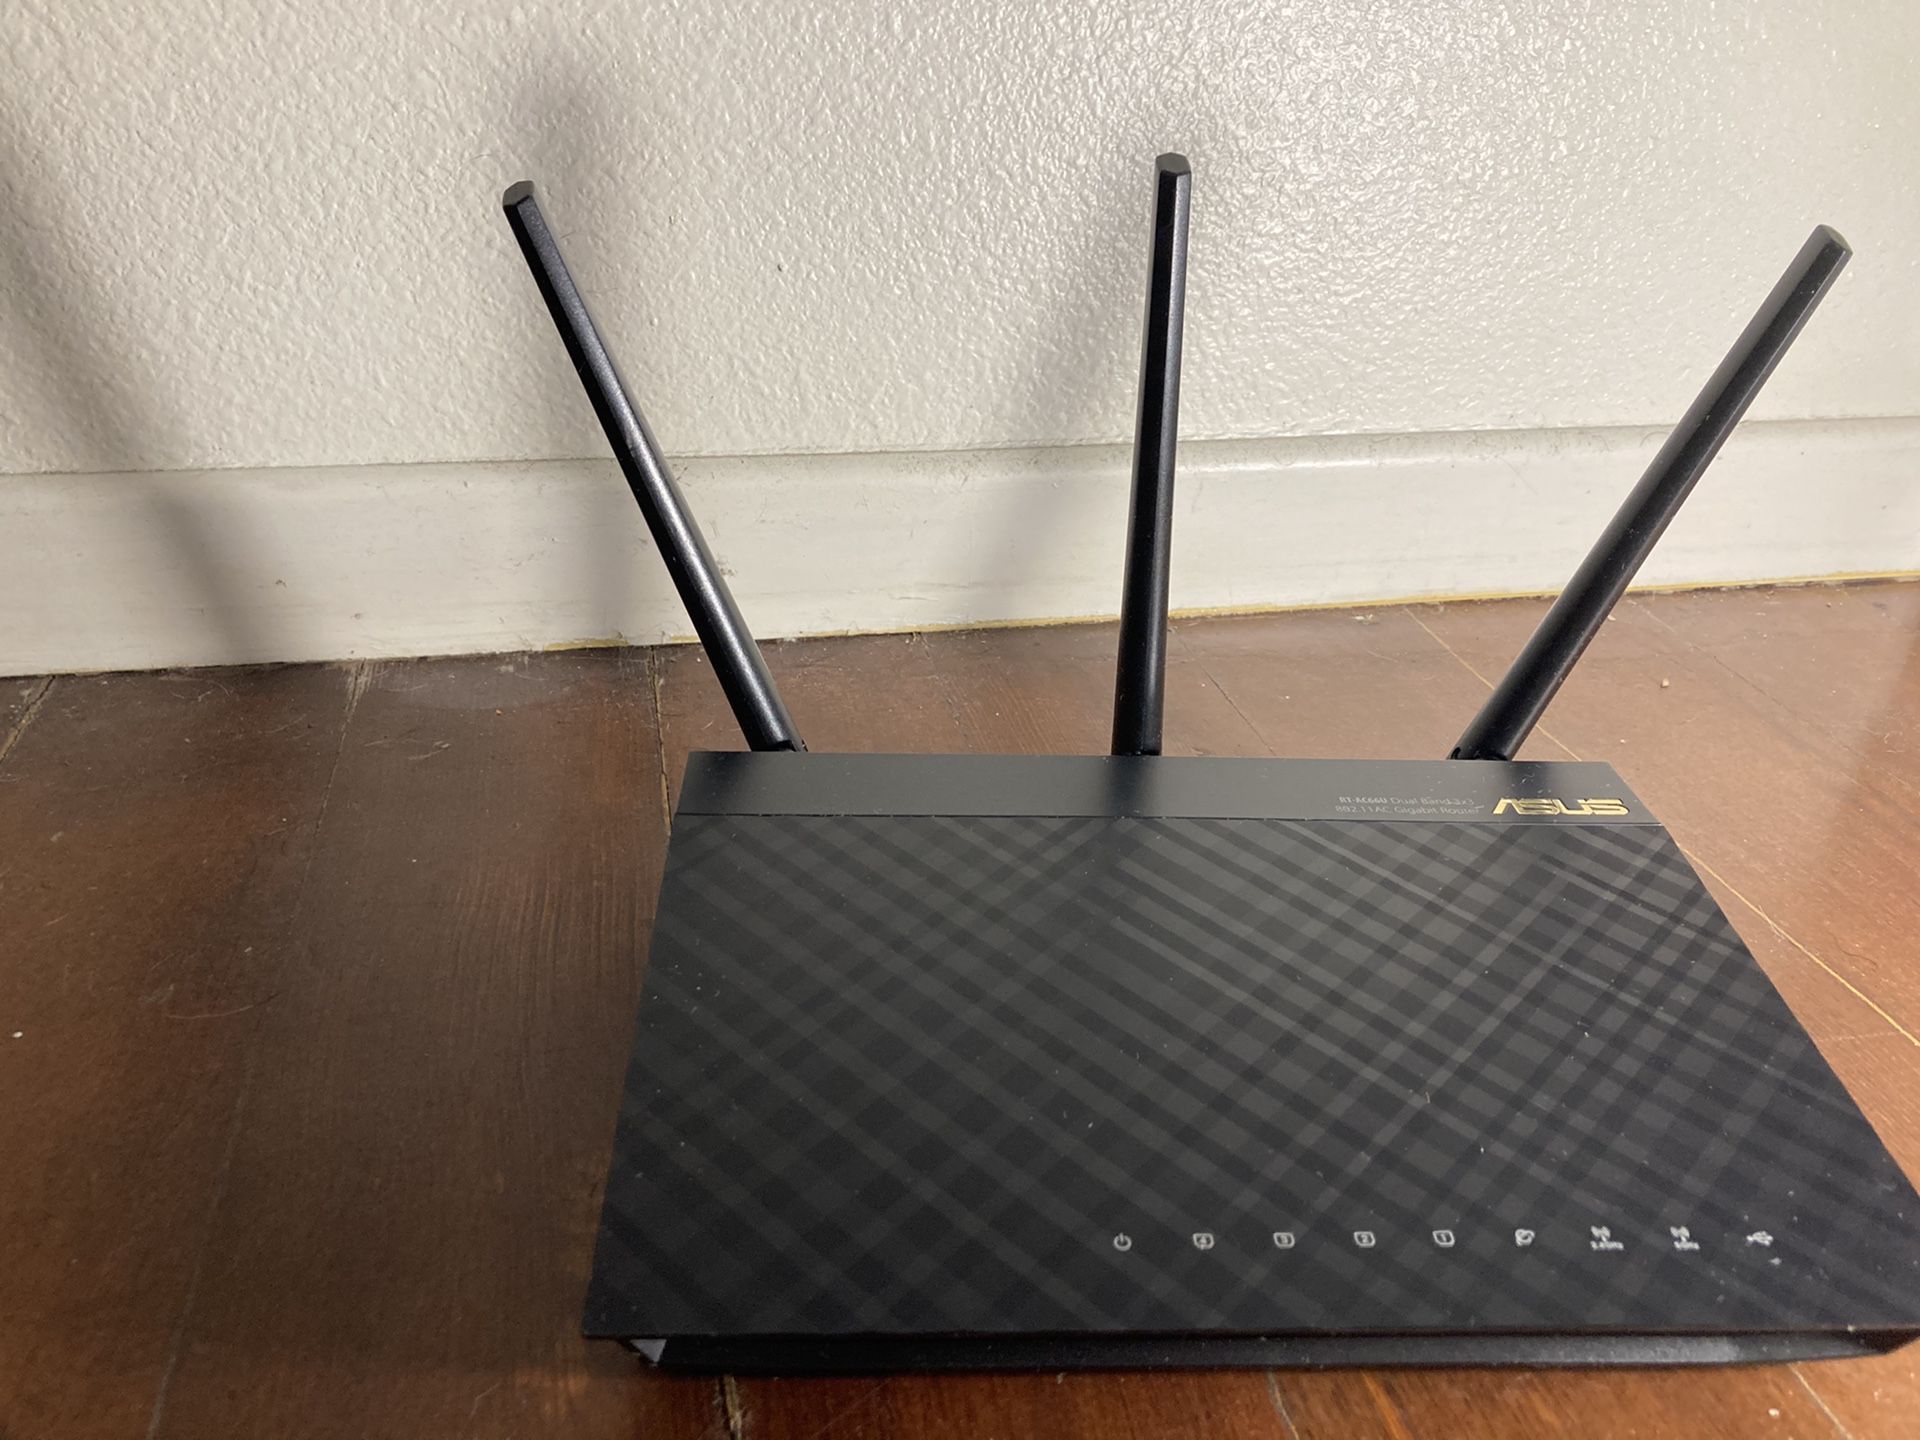 ASUS Dual-Band 3x3 Wi-Fi 4-Port Gigabit Wireless Router (AC66U)